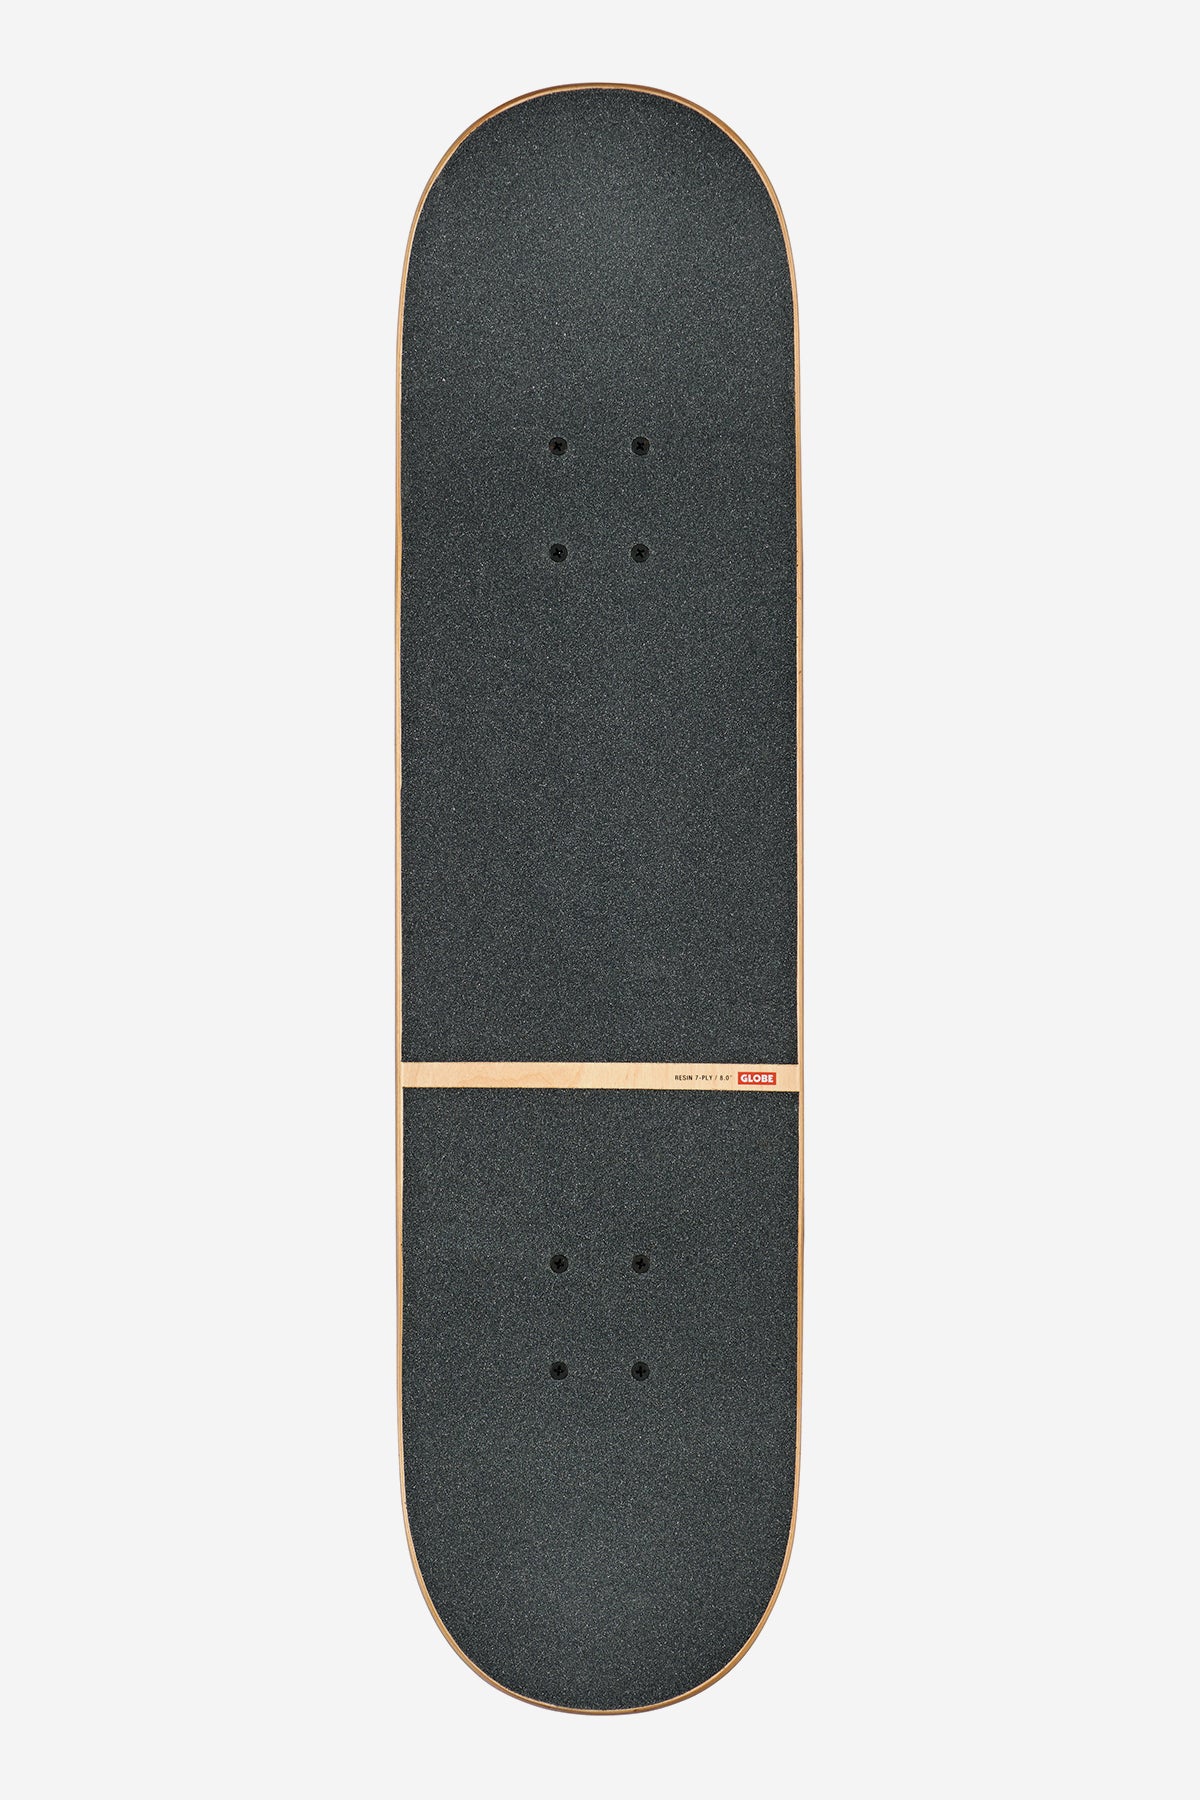 Globe - G1 Stack - Refracted - 8.0" Completo Skateboard